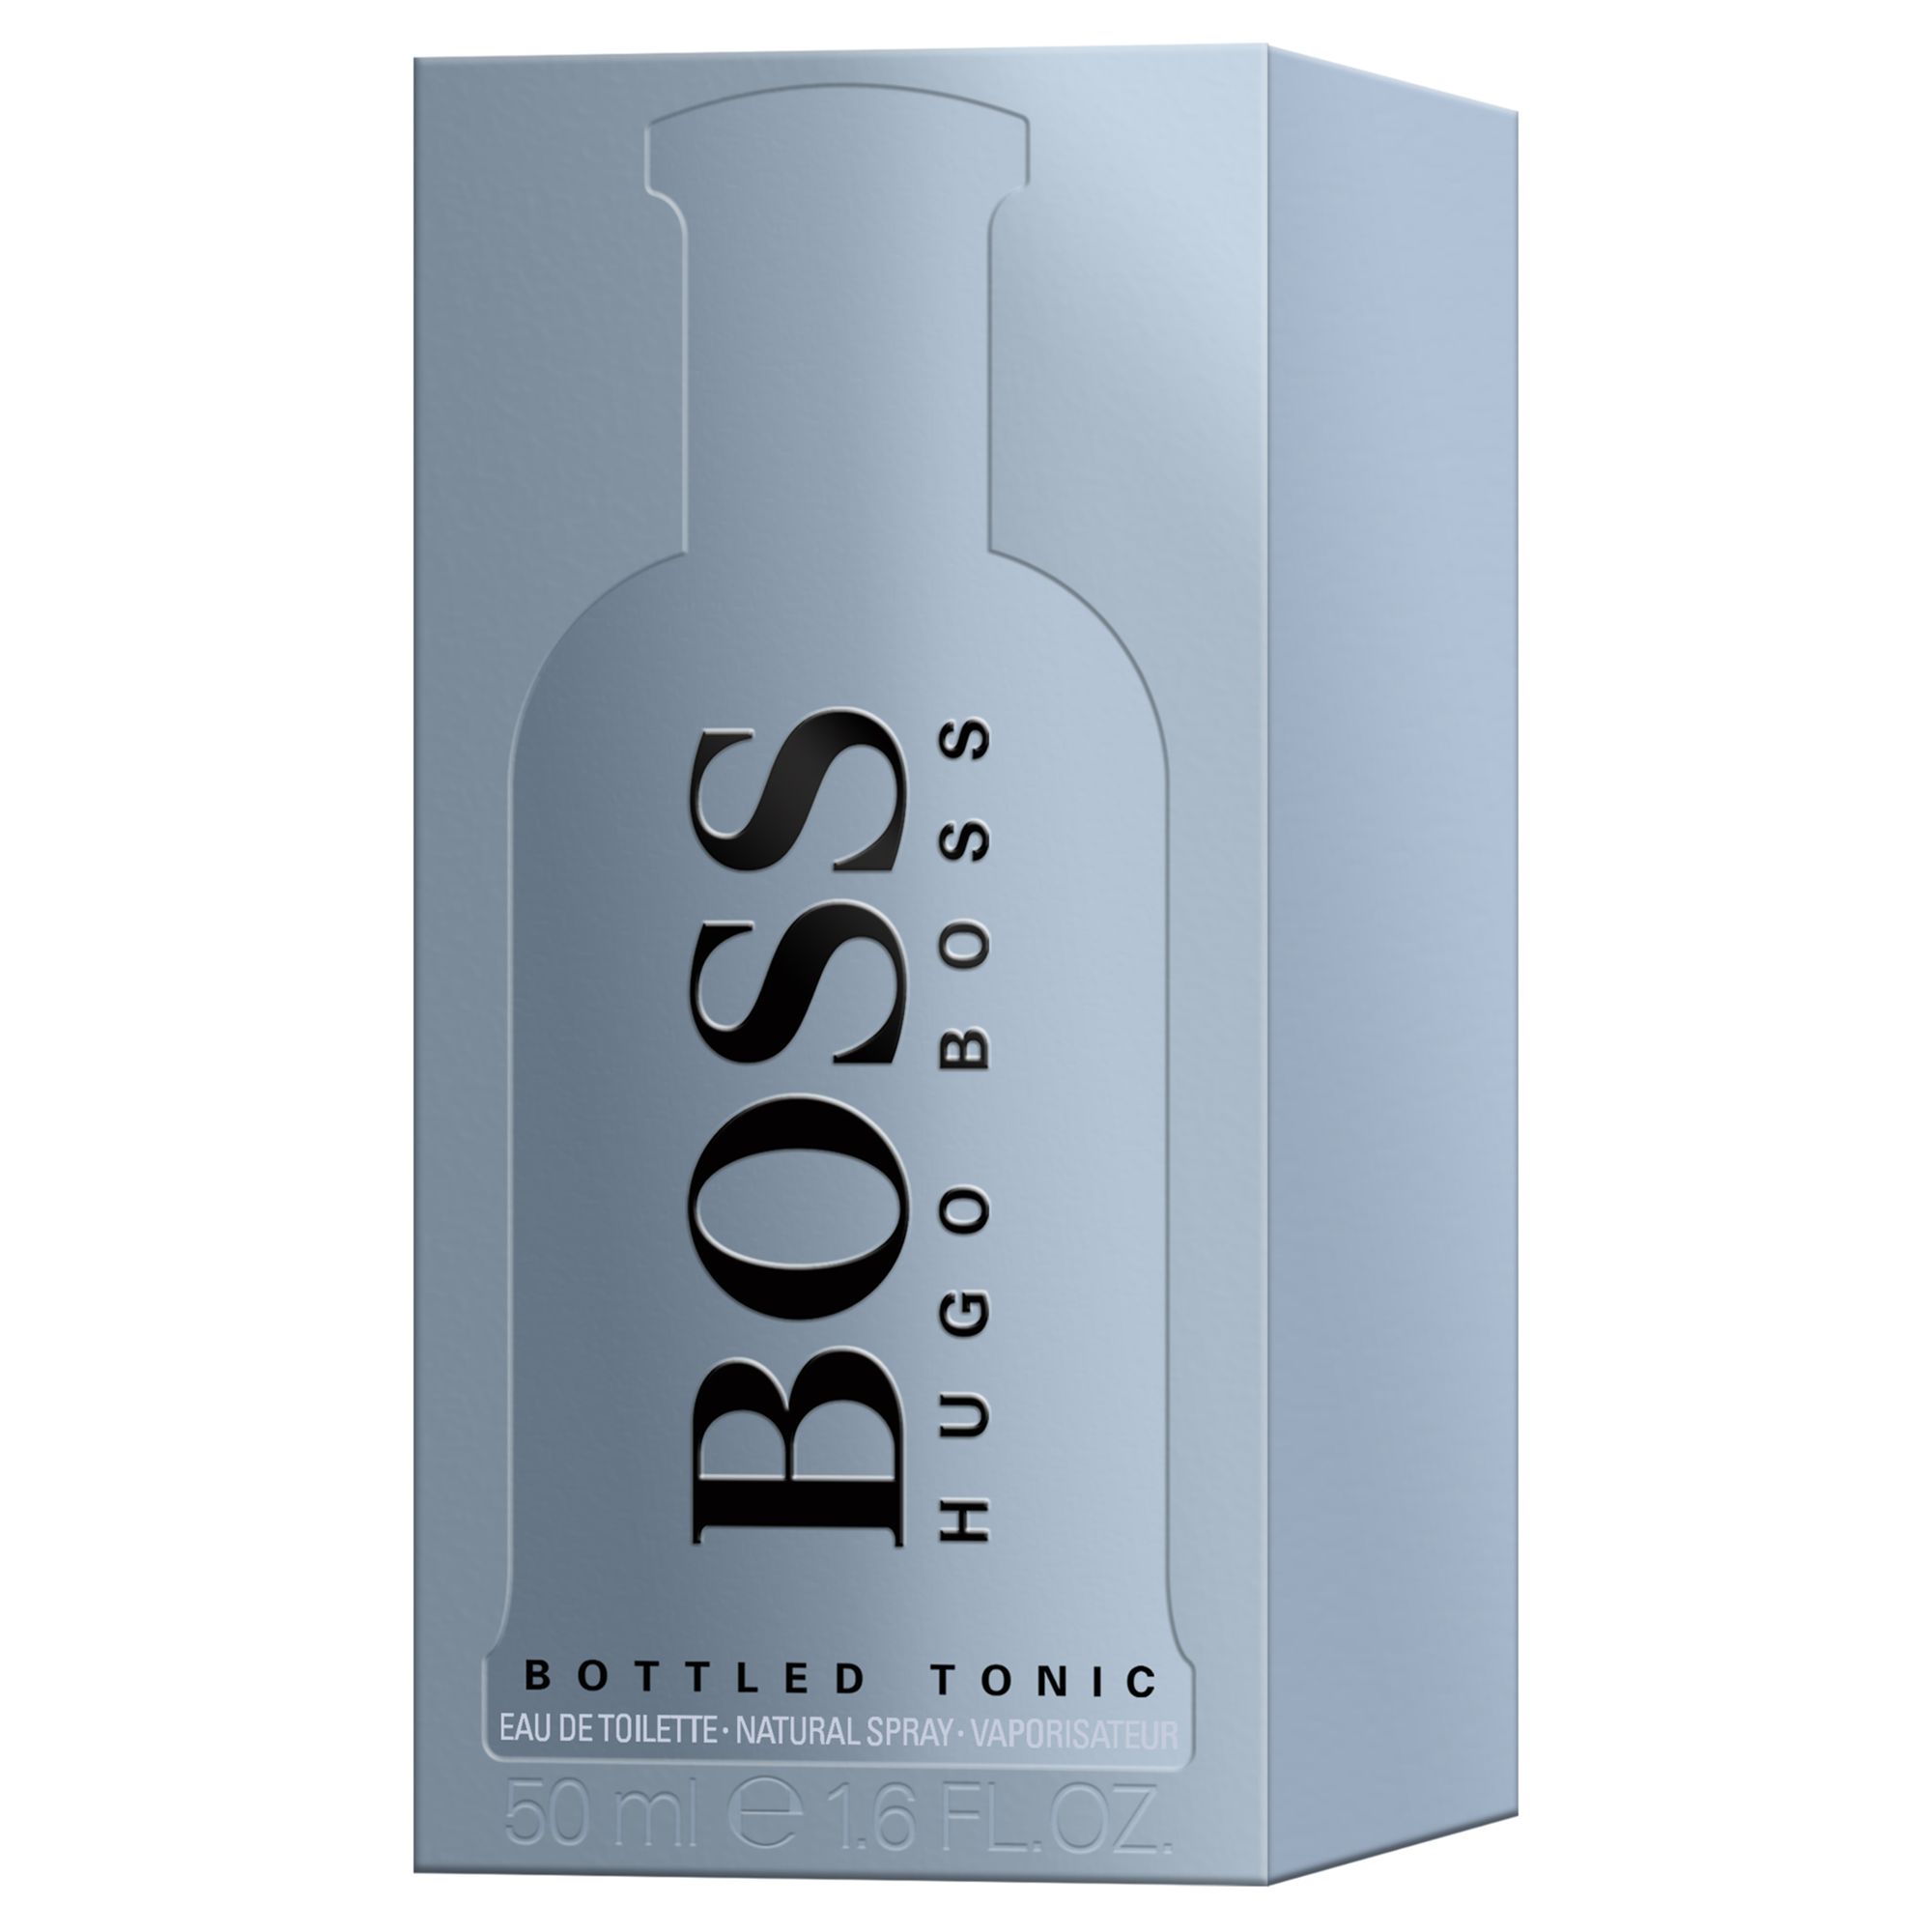 hugo boss parfum tonic